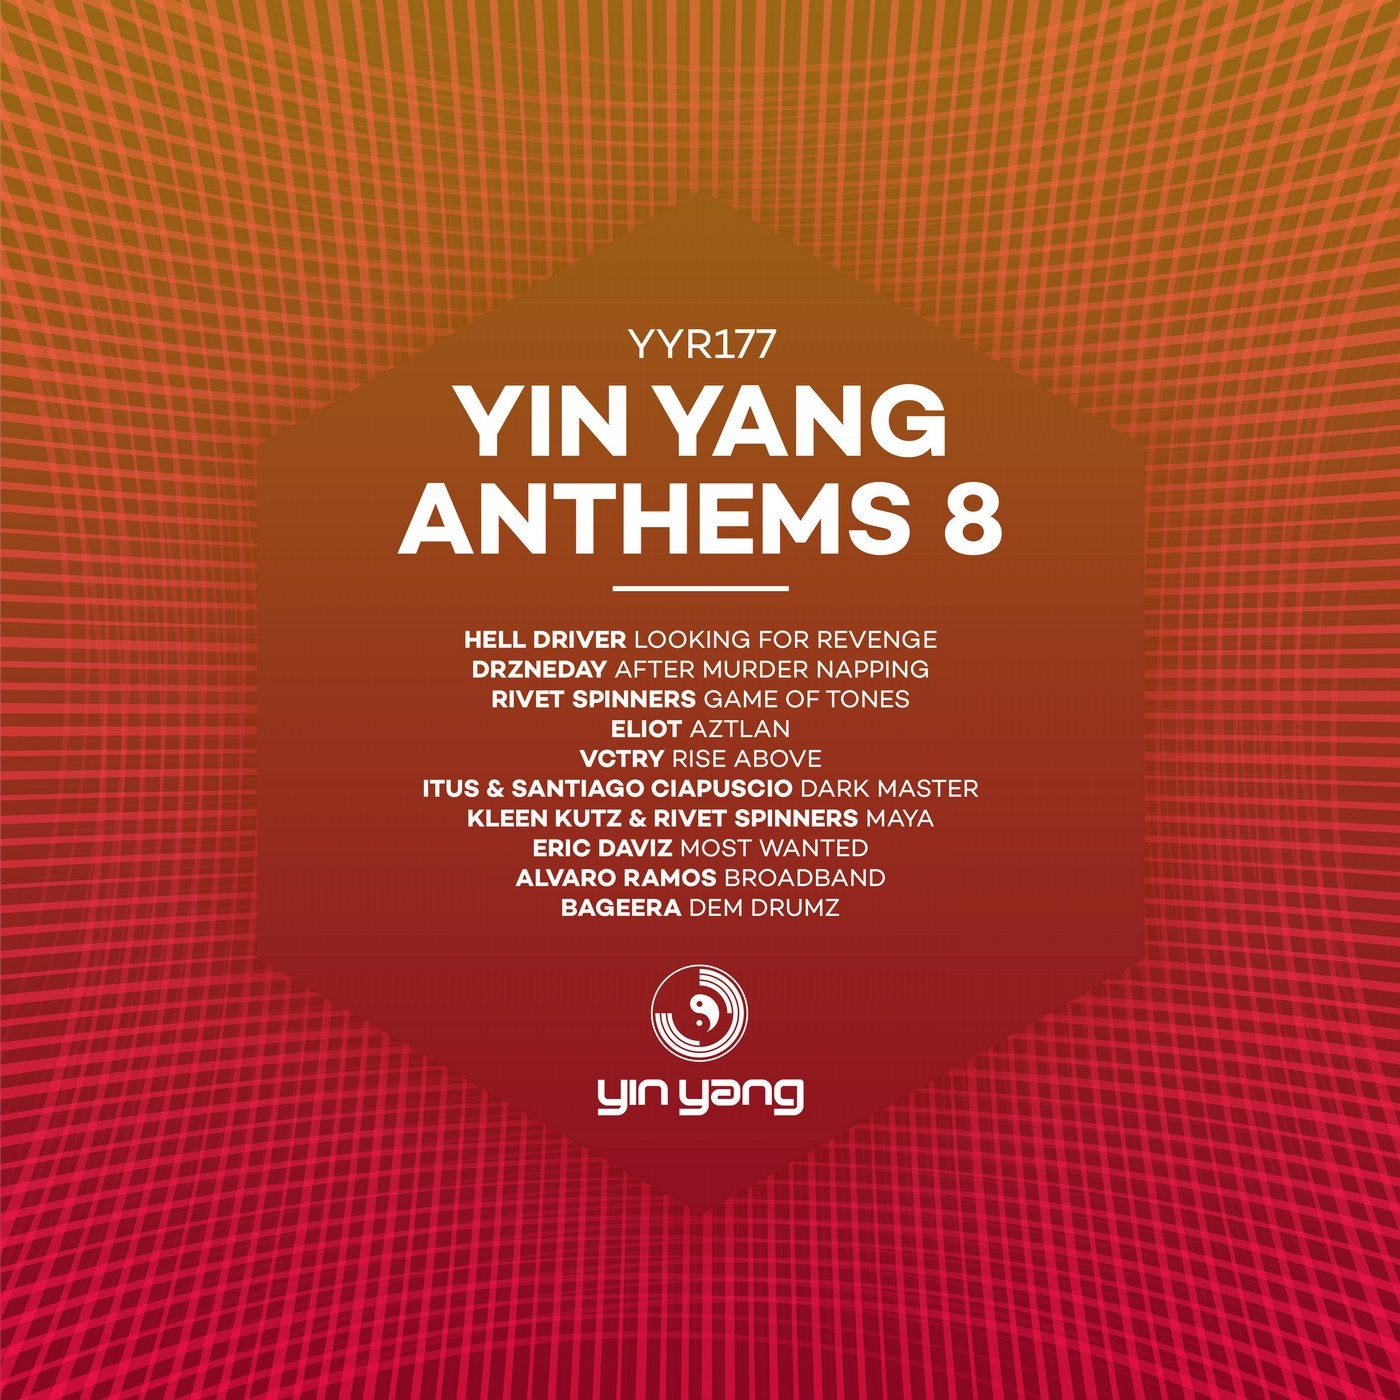 Yin Yang Anthems 8